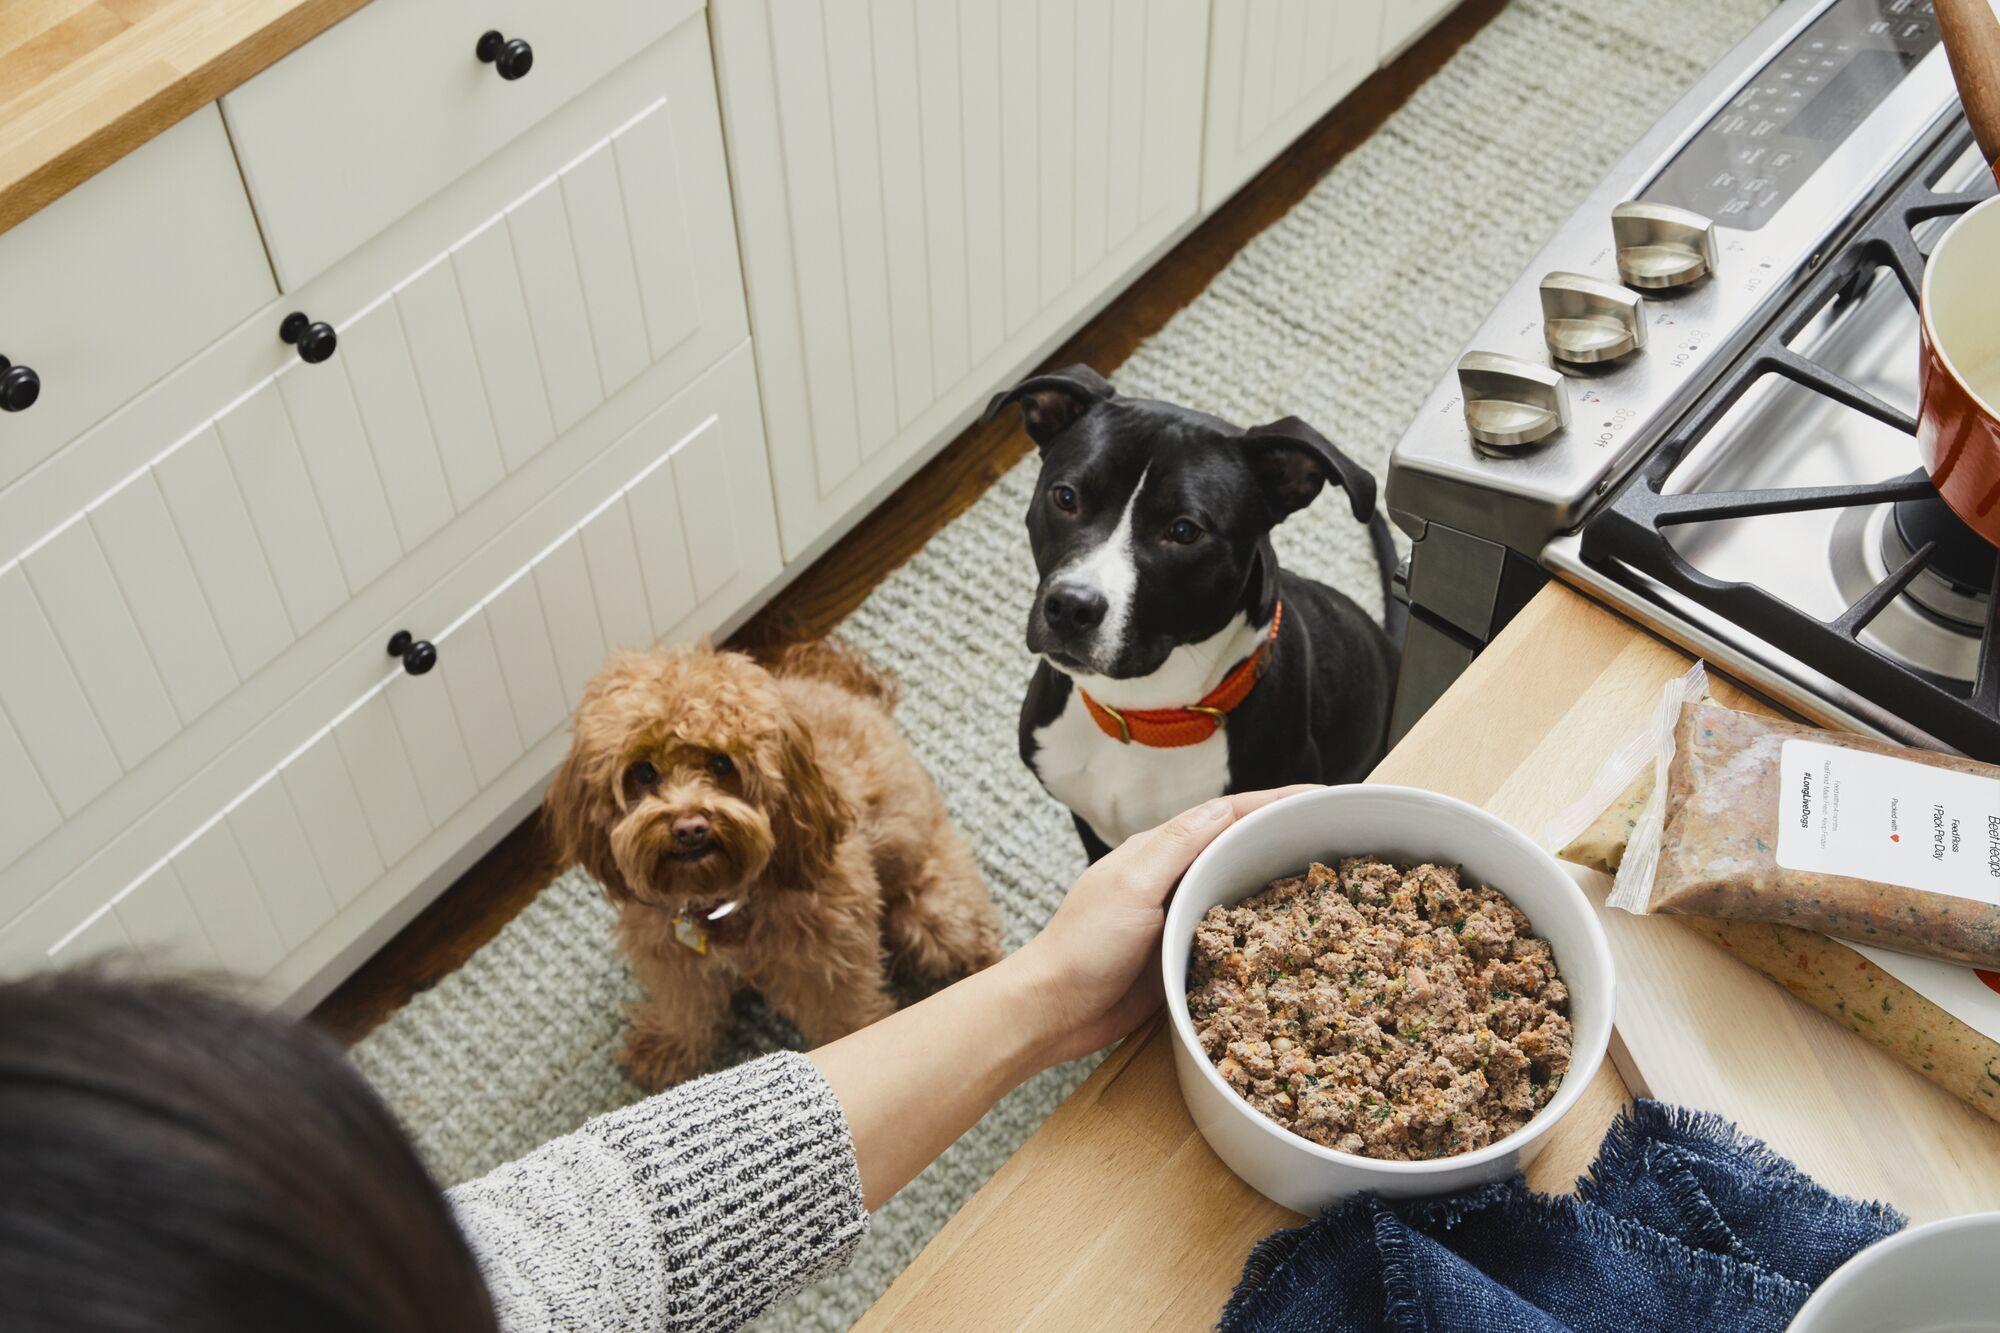 https://www.thefarmersdog.com/digest/wp-content/uploads/2020/05/Dogs-Waiting-for-Food.jpg